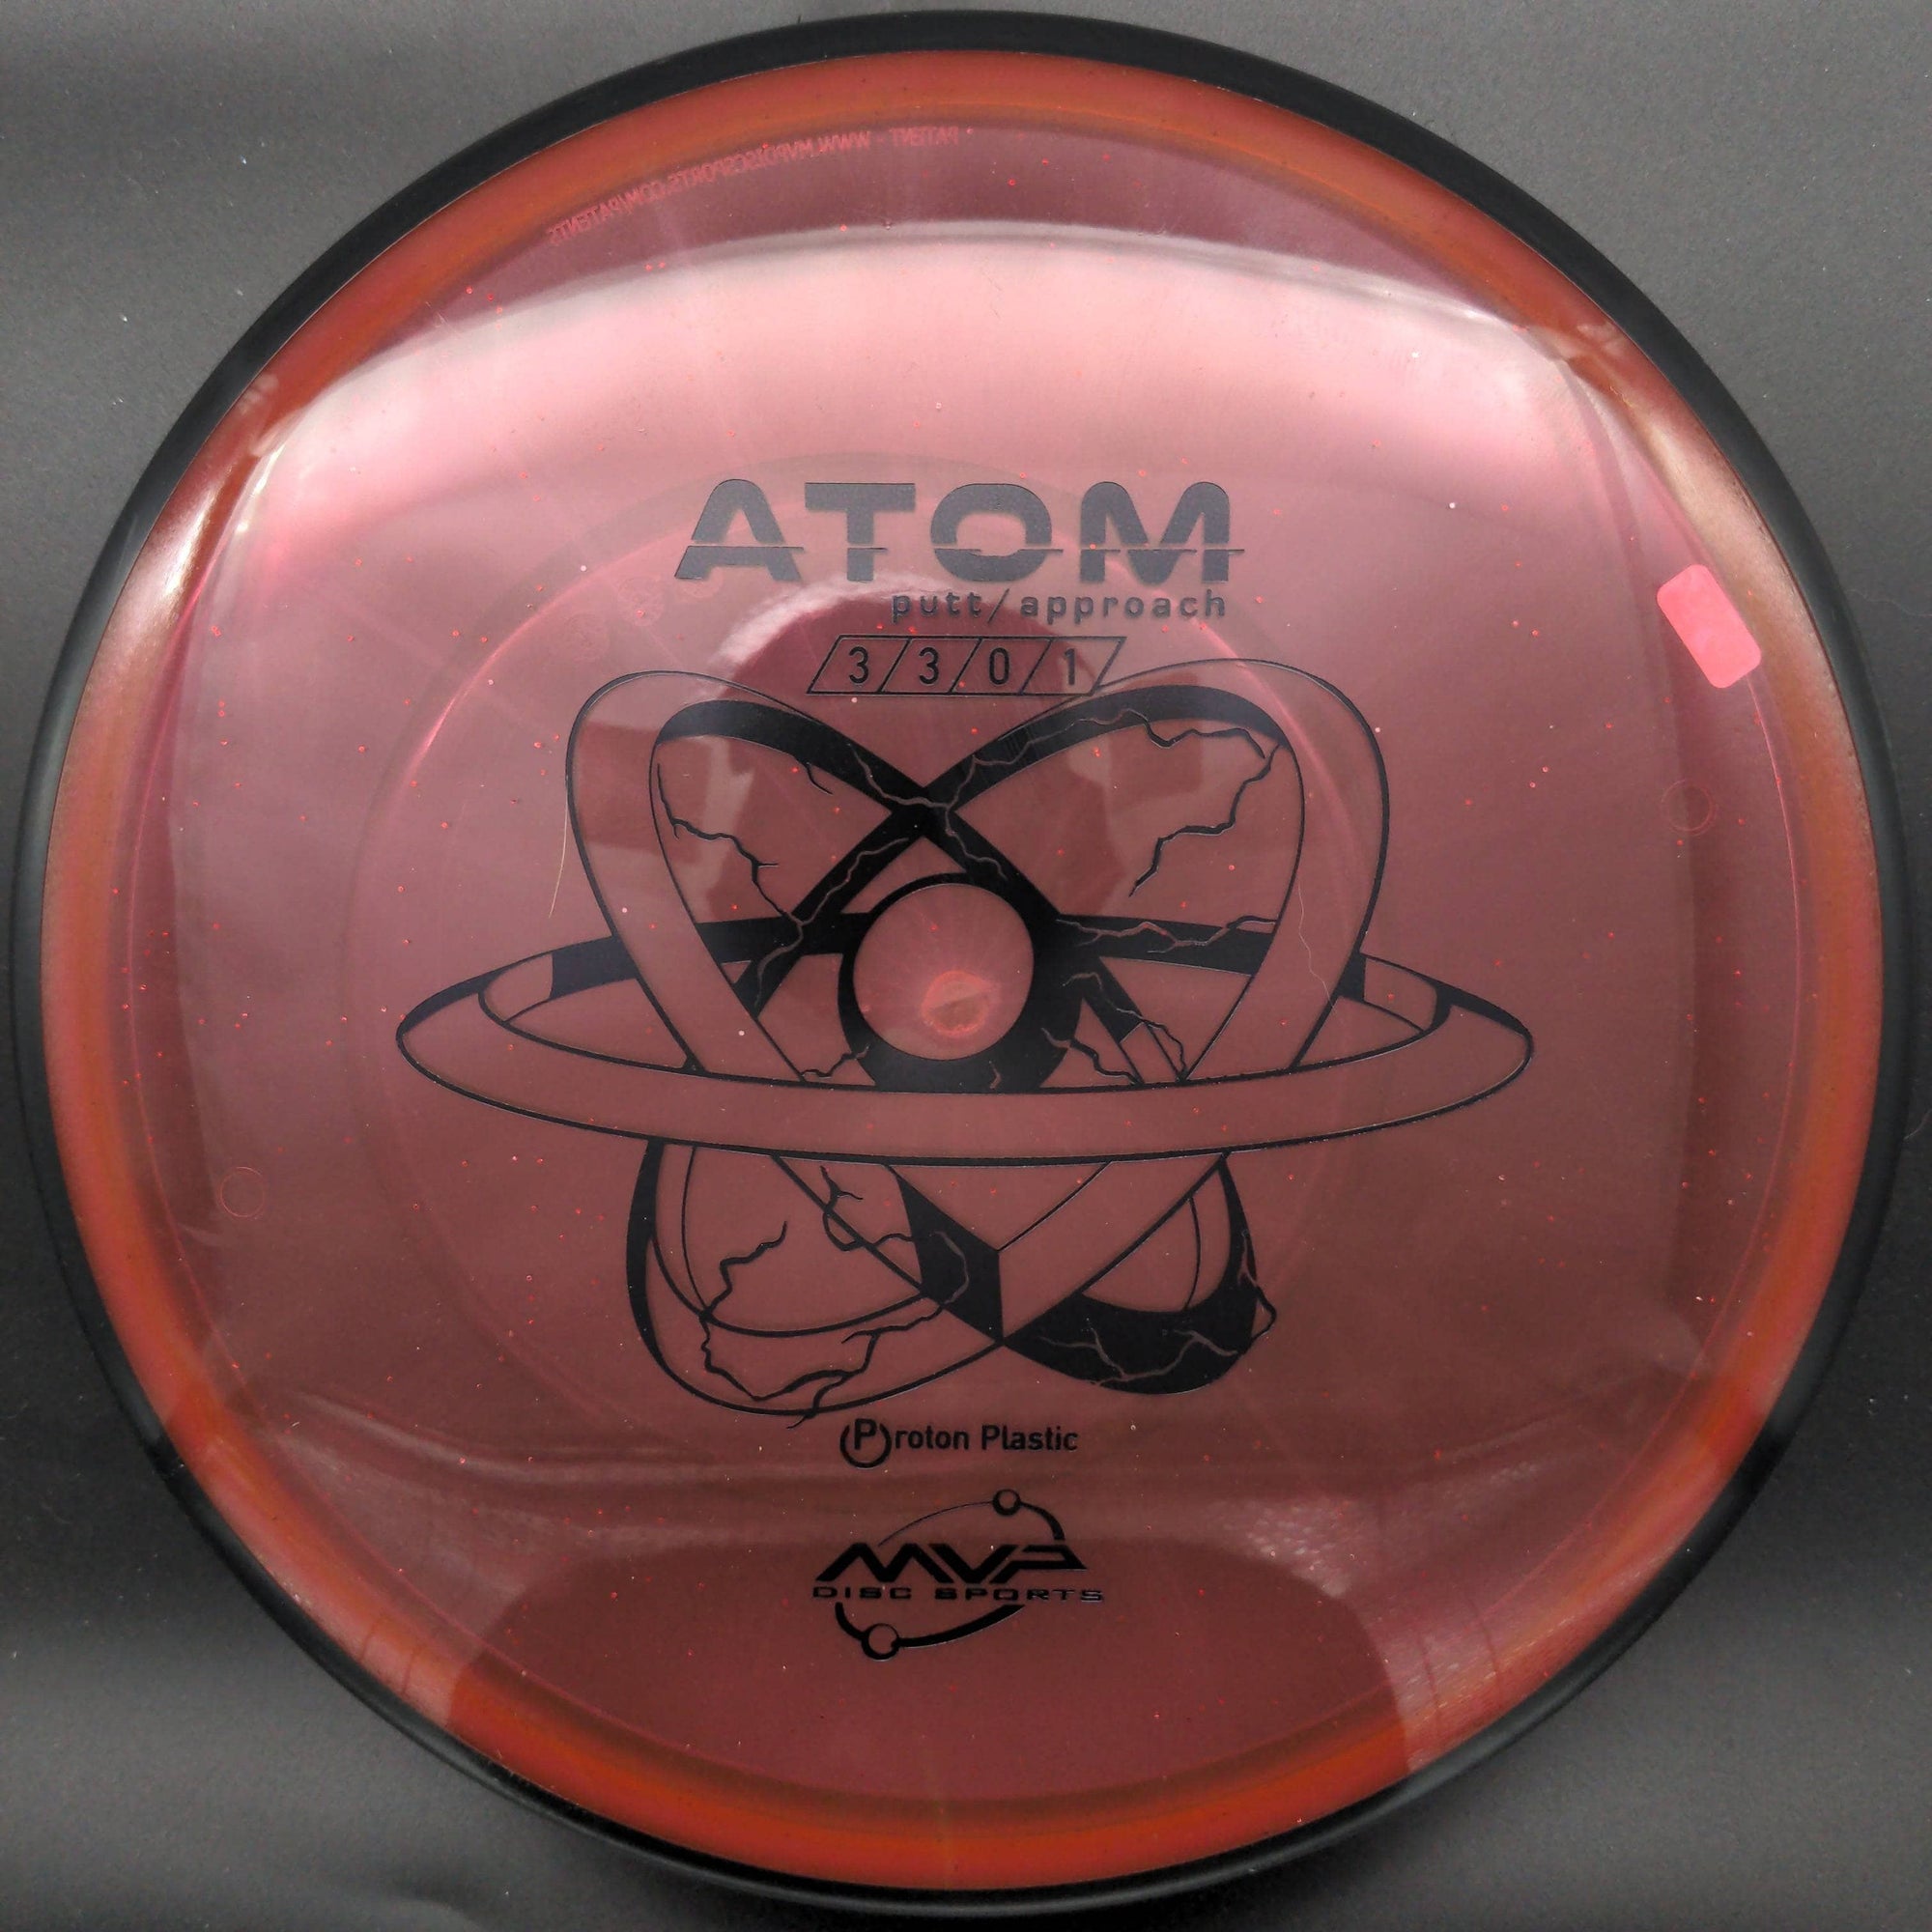 MVP Putter Atom, Proton Plastic